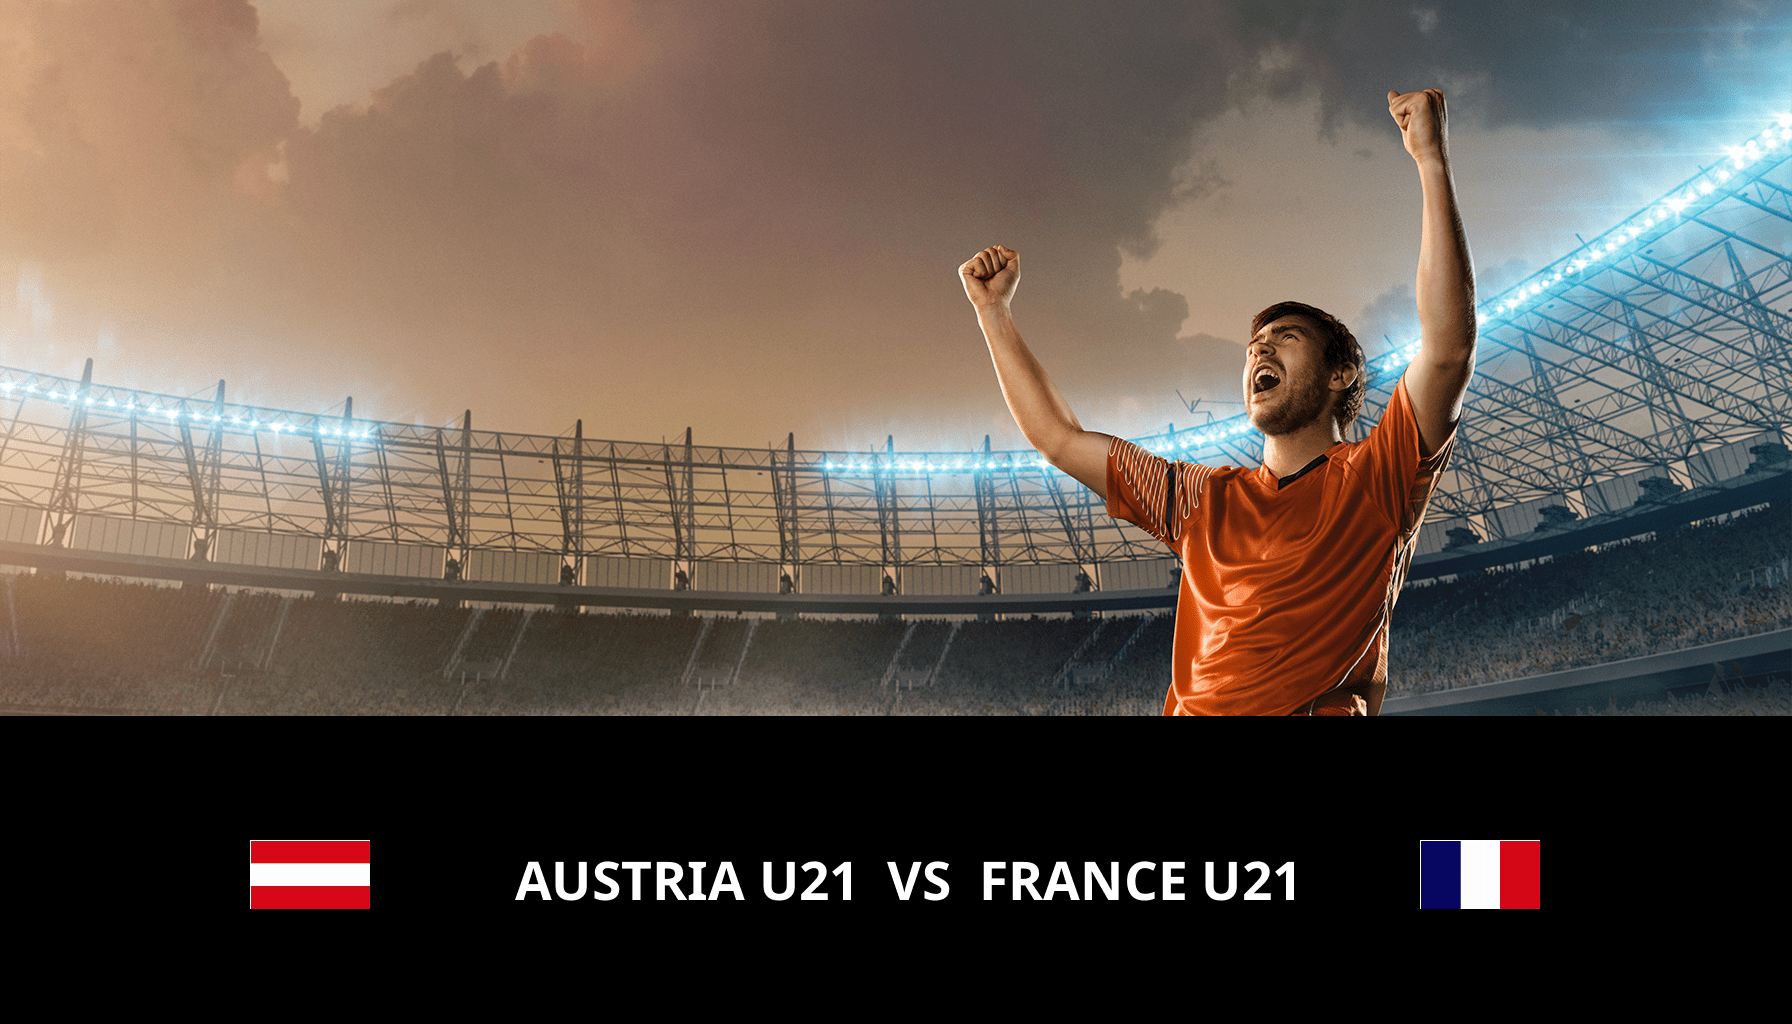 Previsione per Austria U21 VS France U21 il 17/11/2023 Analysis of the match